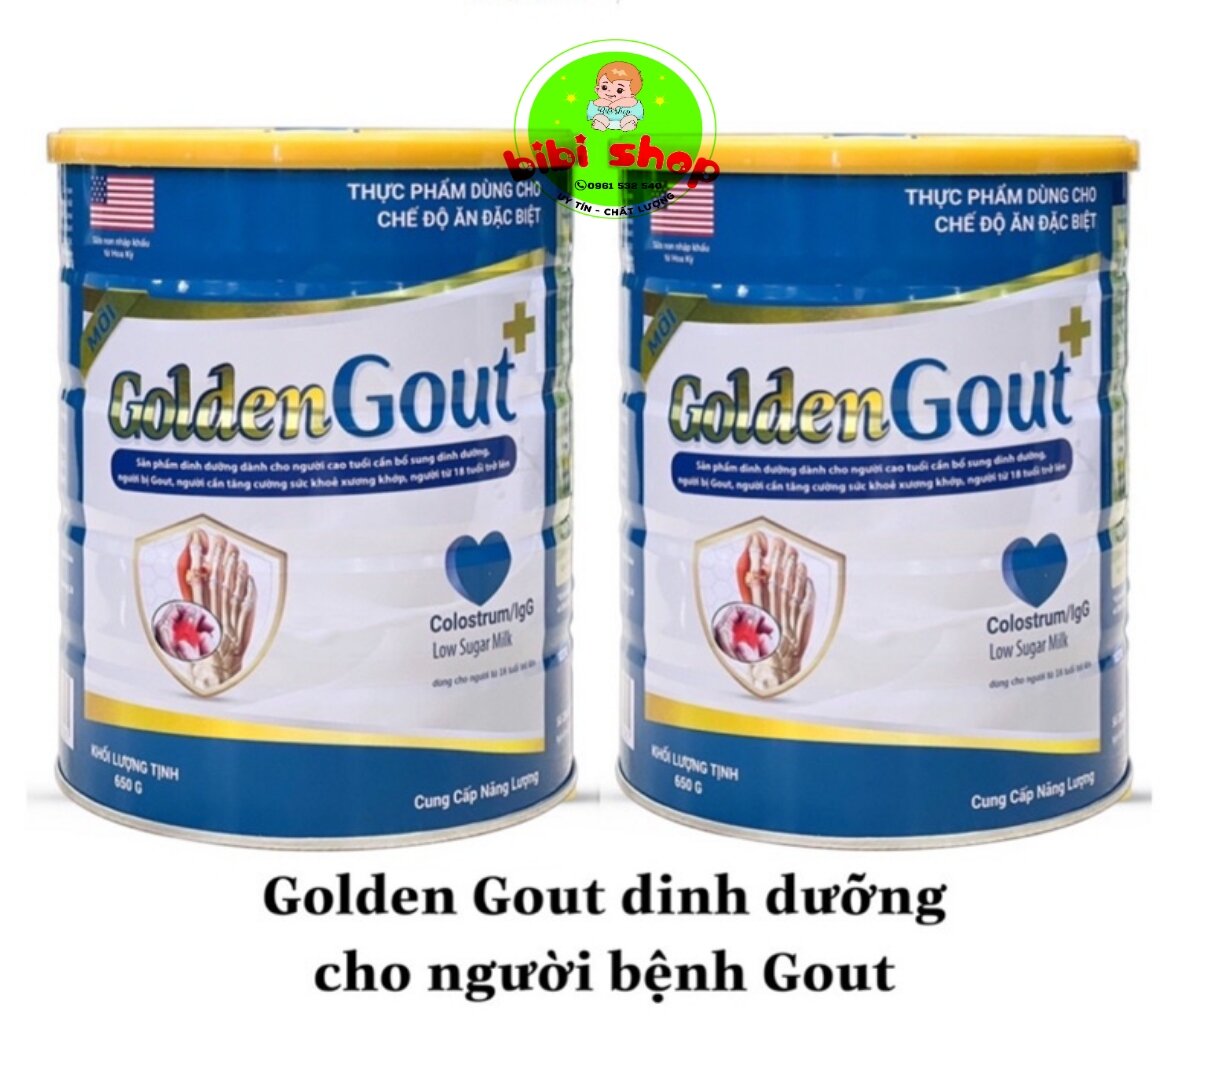 Sữa golden gout combo 2 lon sữa golden gout hành chính hãng